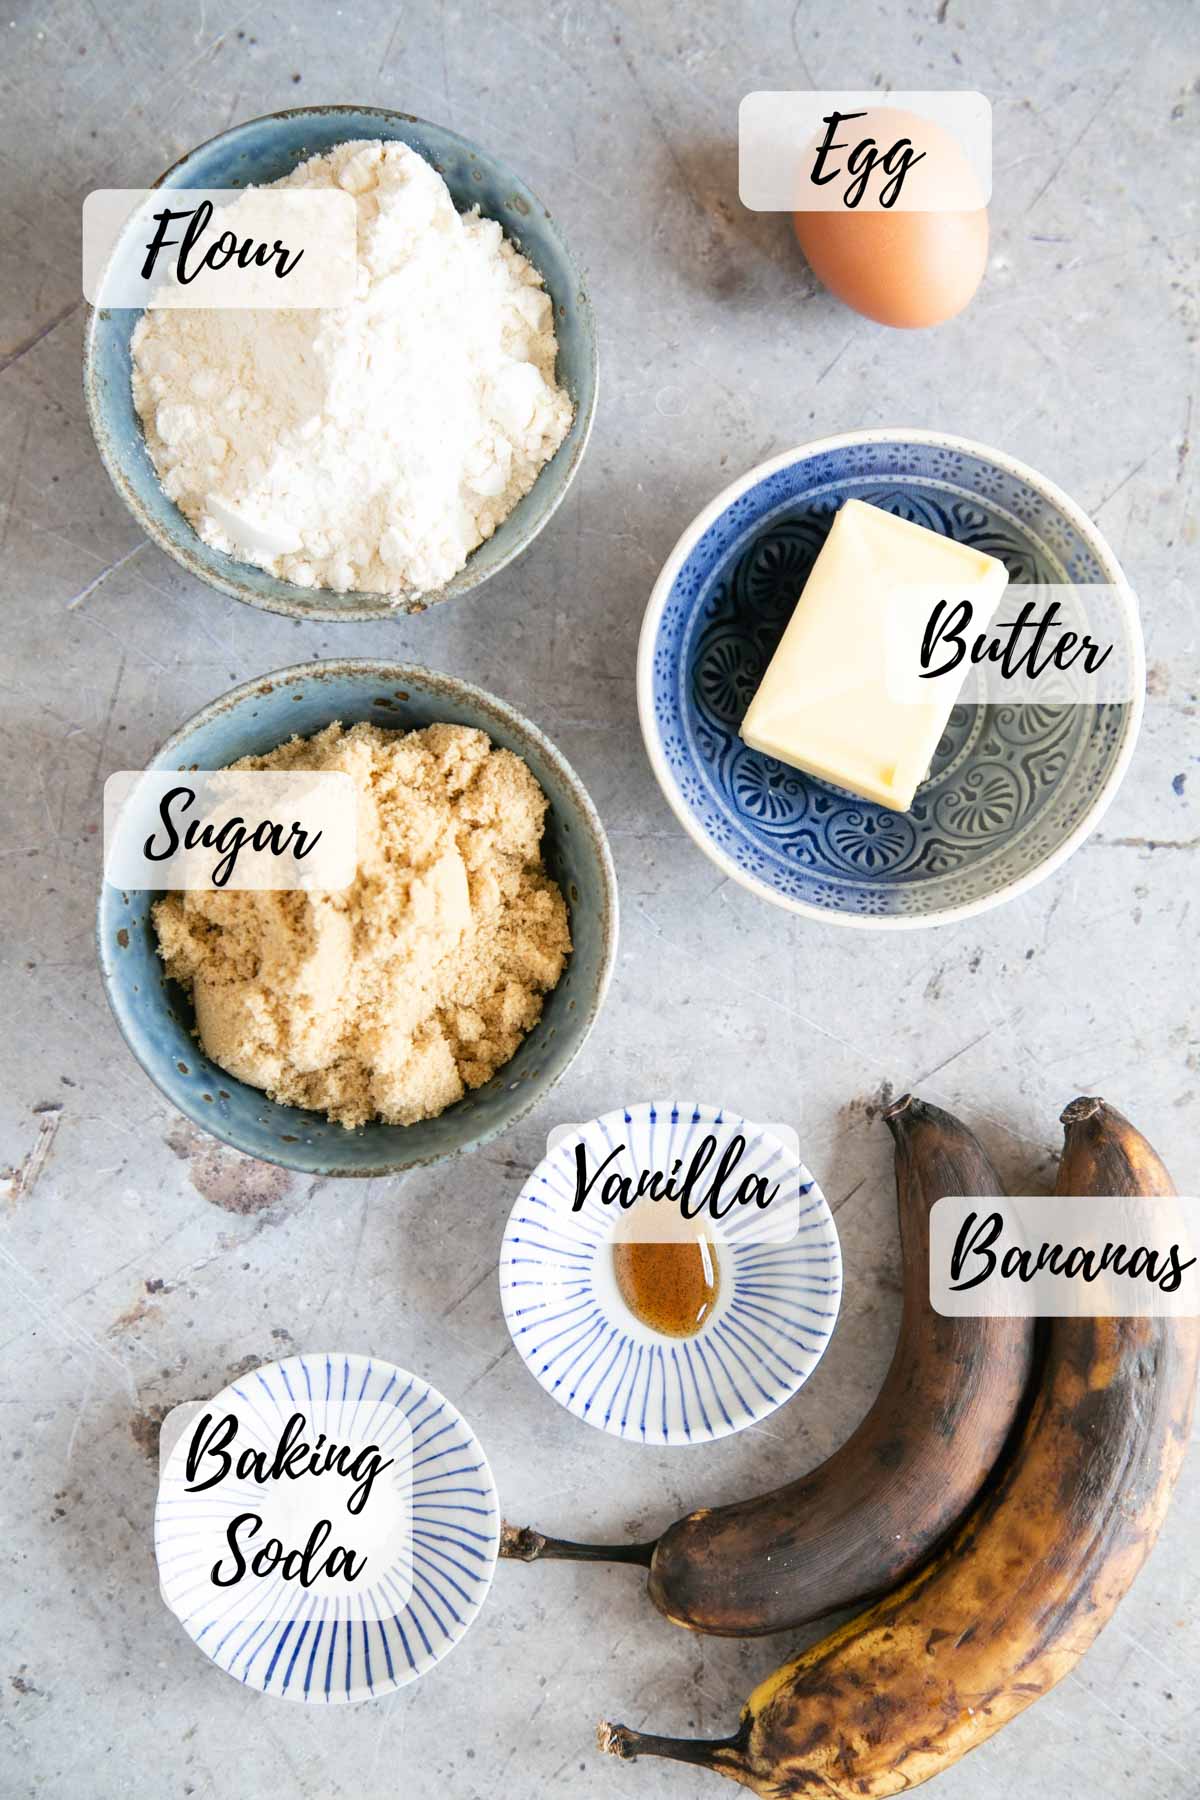 The ingredients: self raising flour, egg, butter, ripe bananas, vanilla, baking soda and sugar.